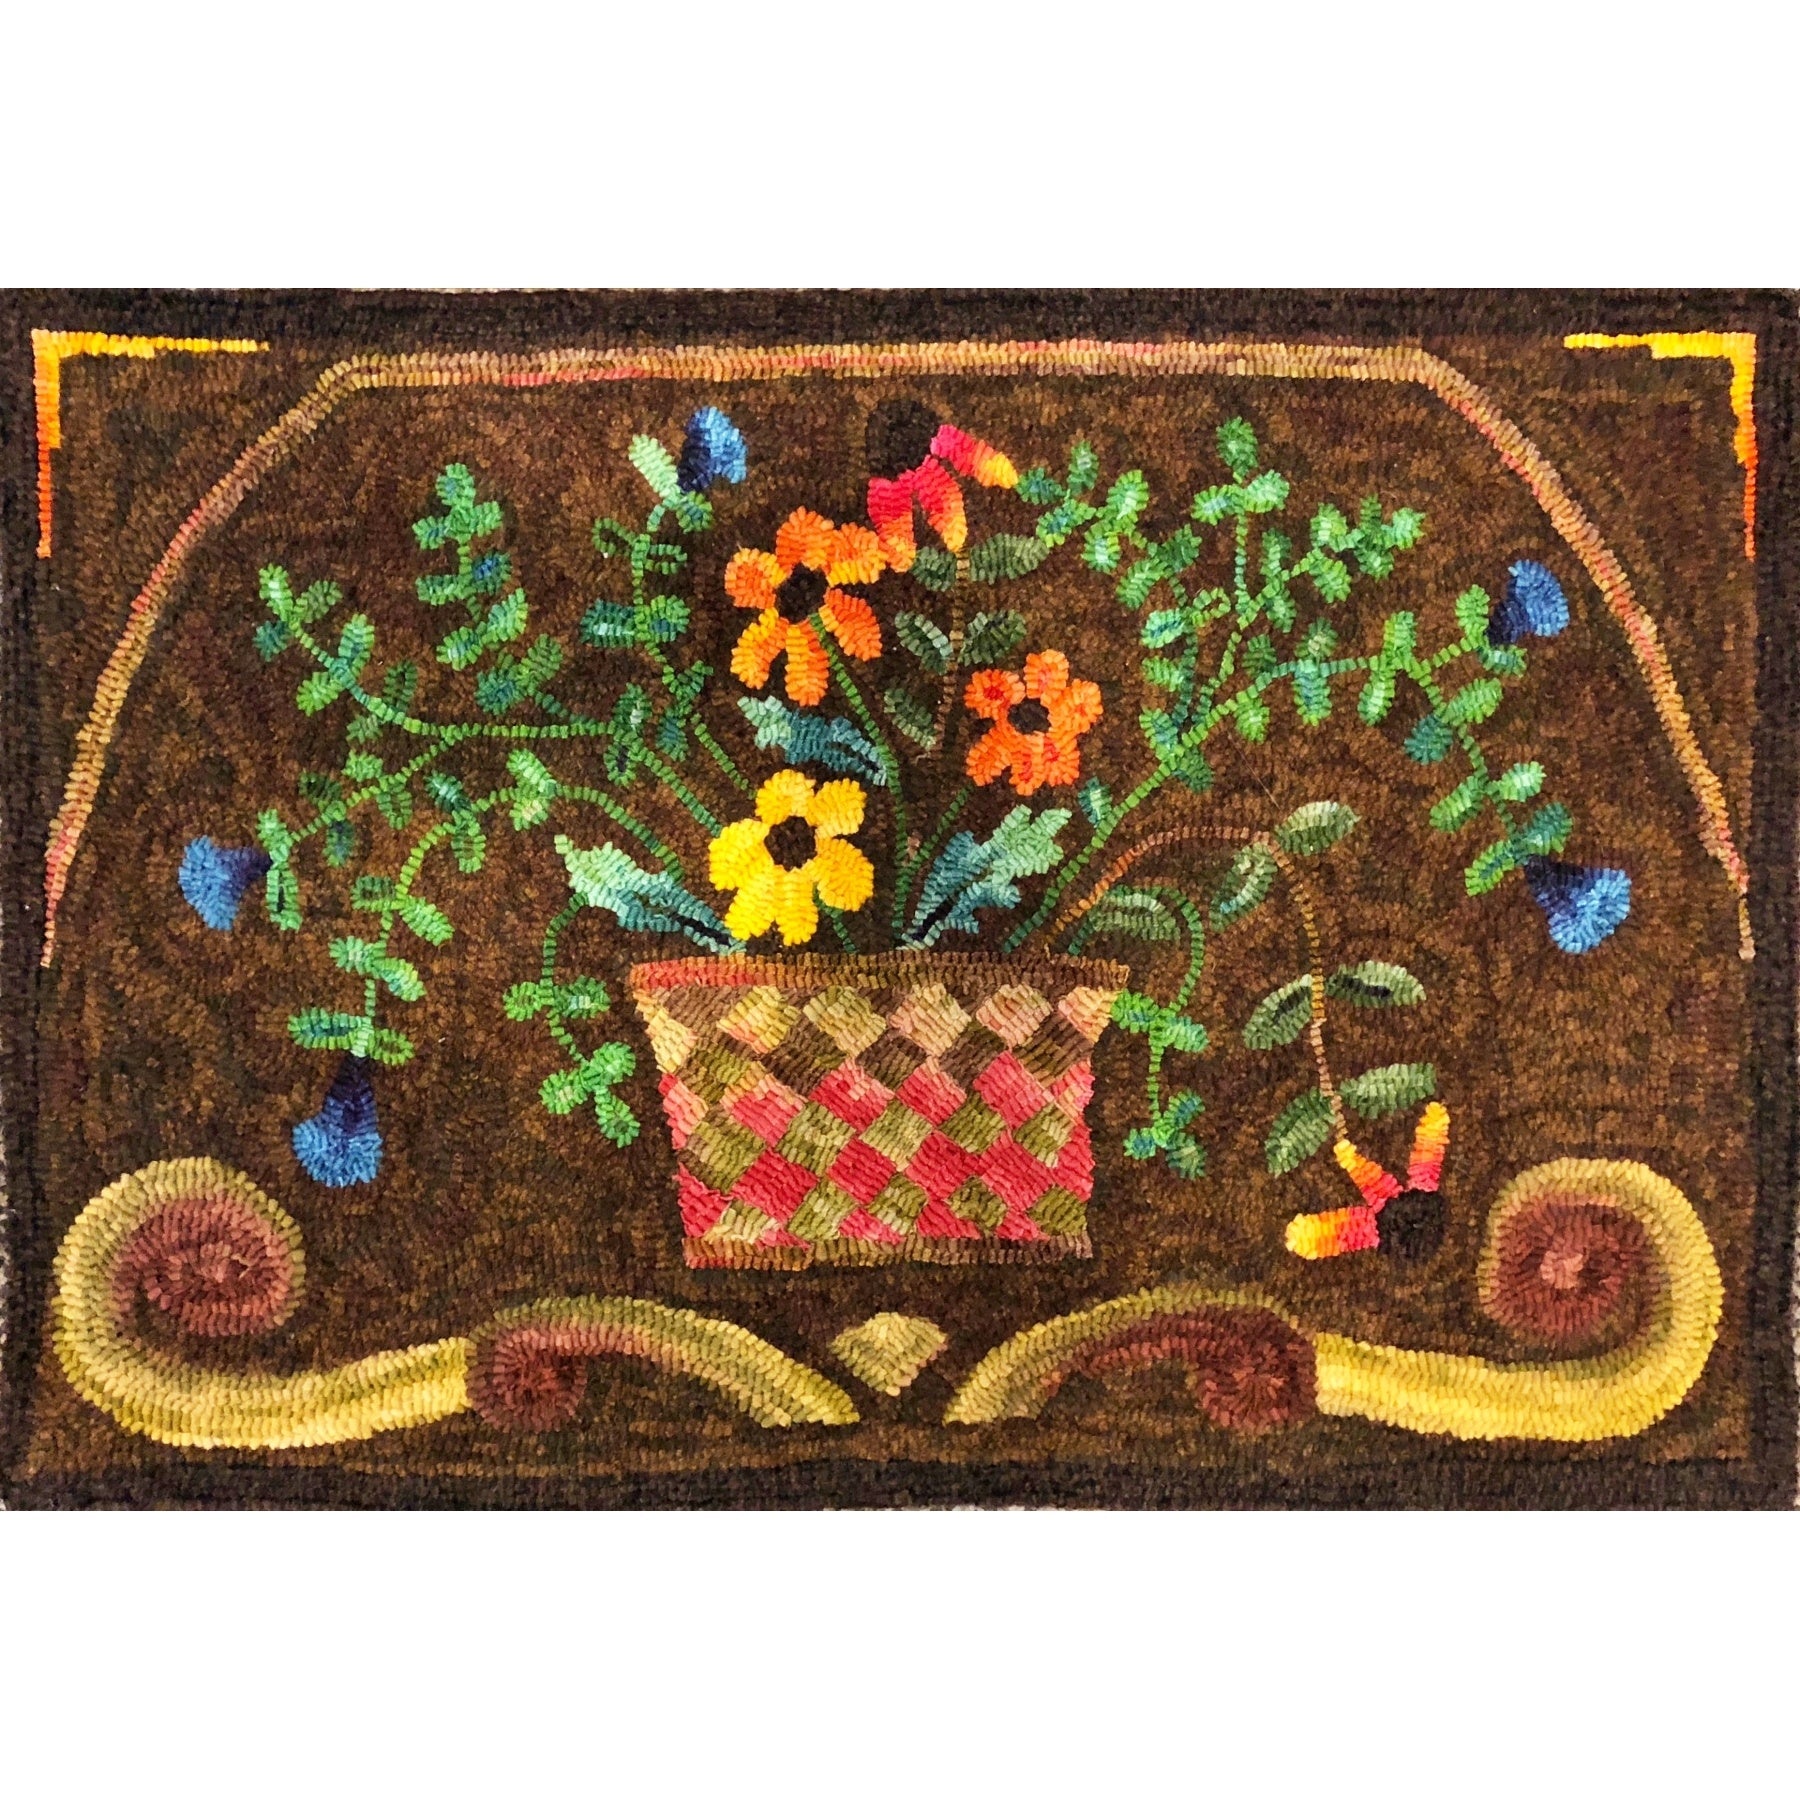 Basket Of Flowers, rug hooked by Libbey Lundgren